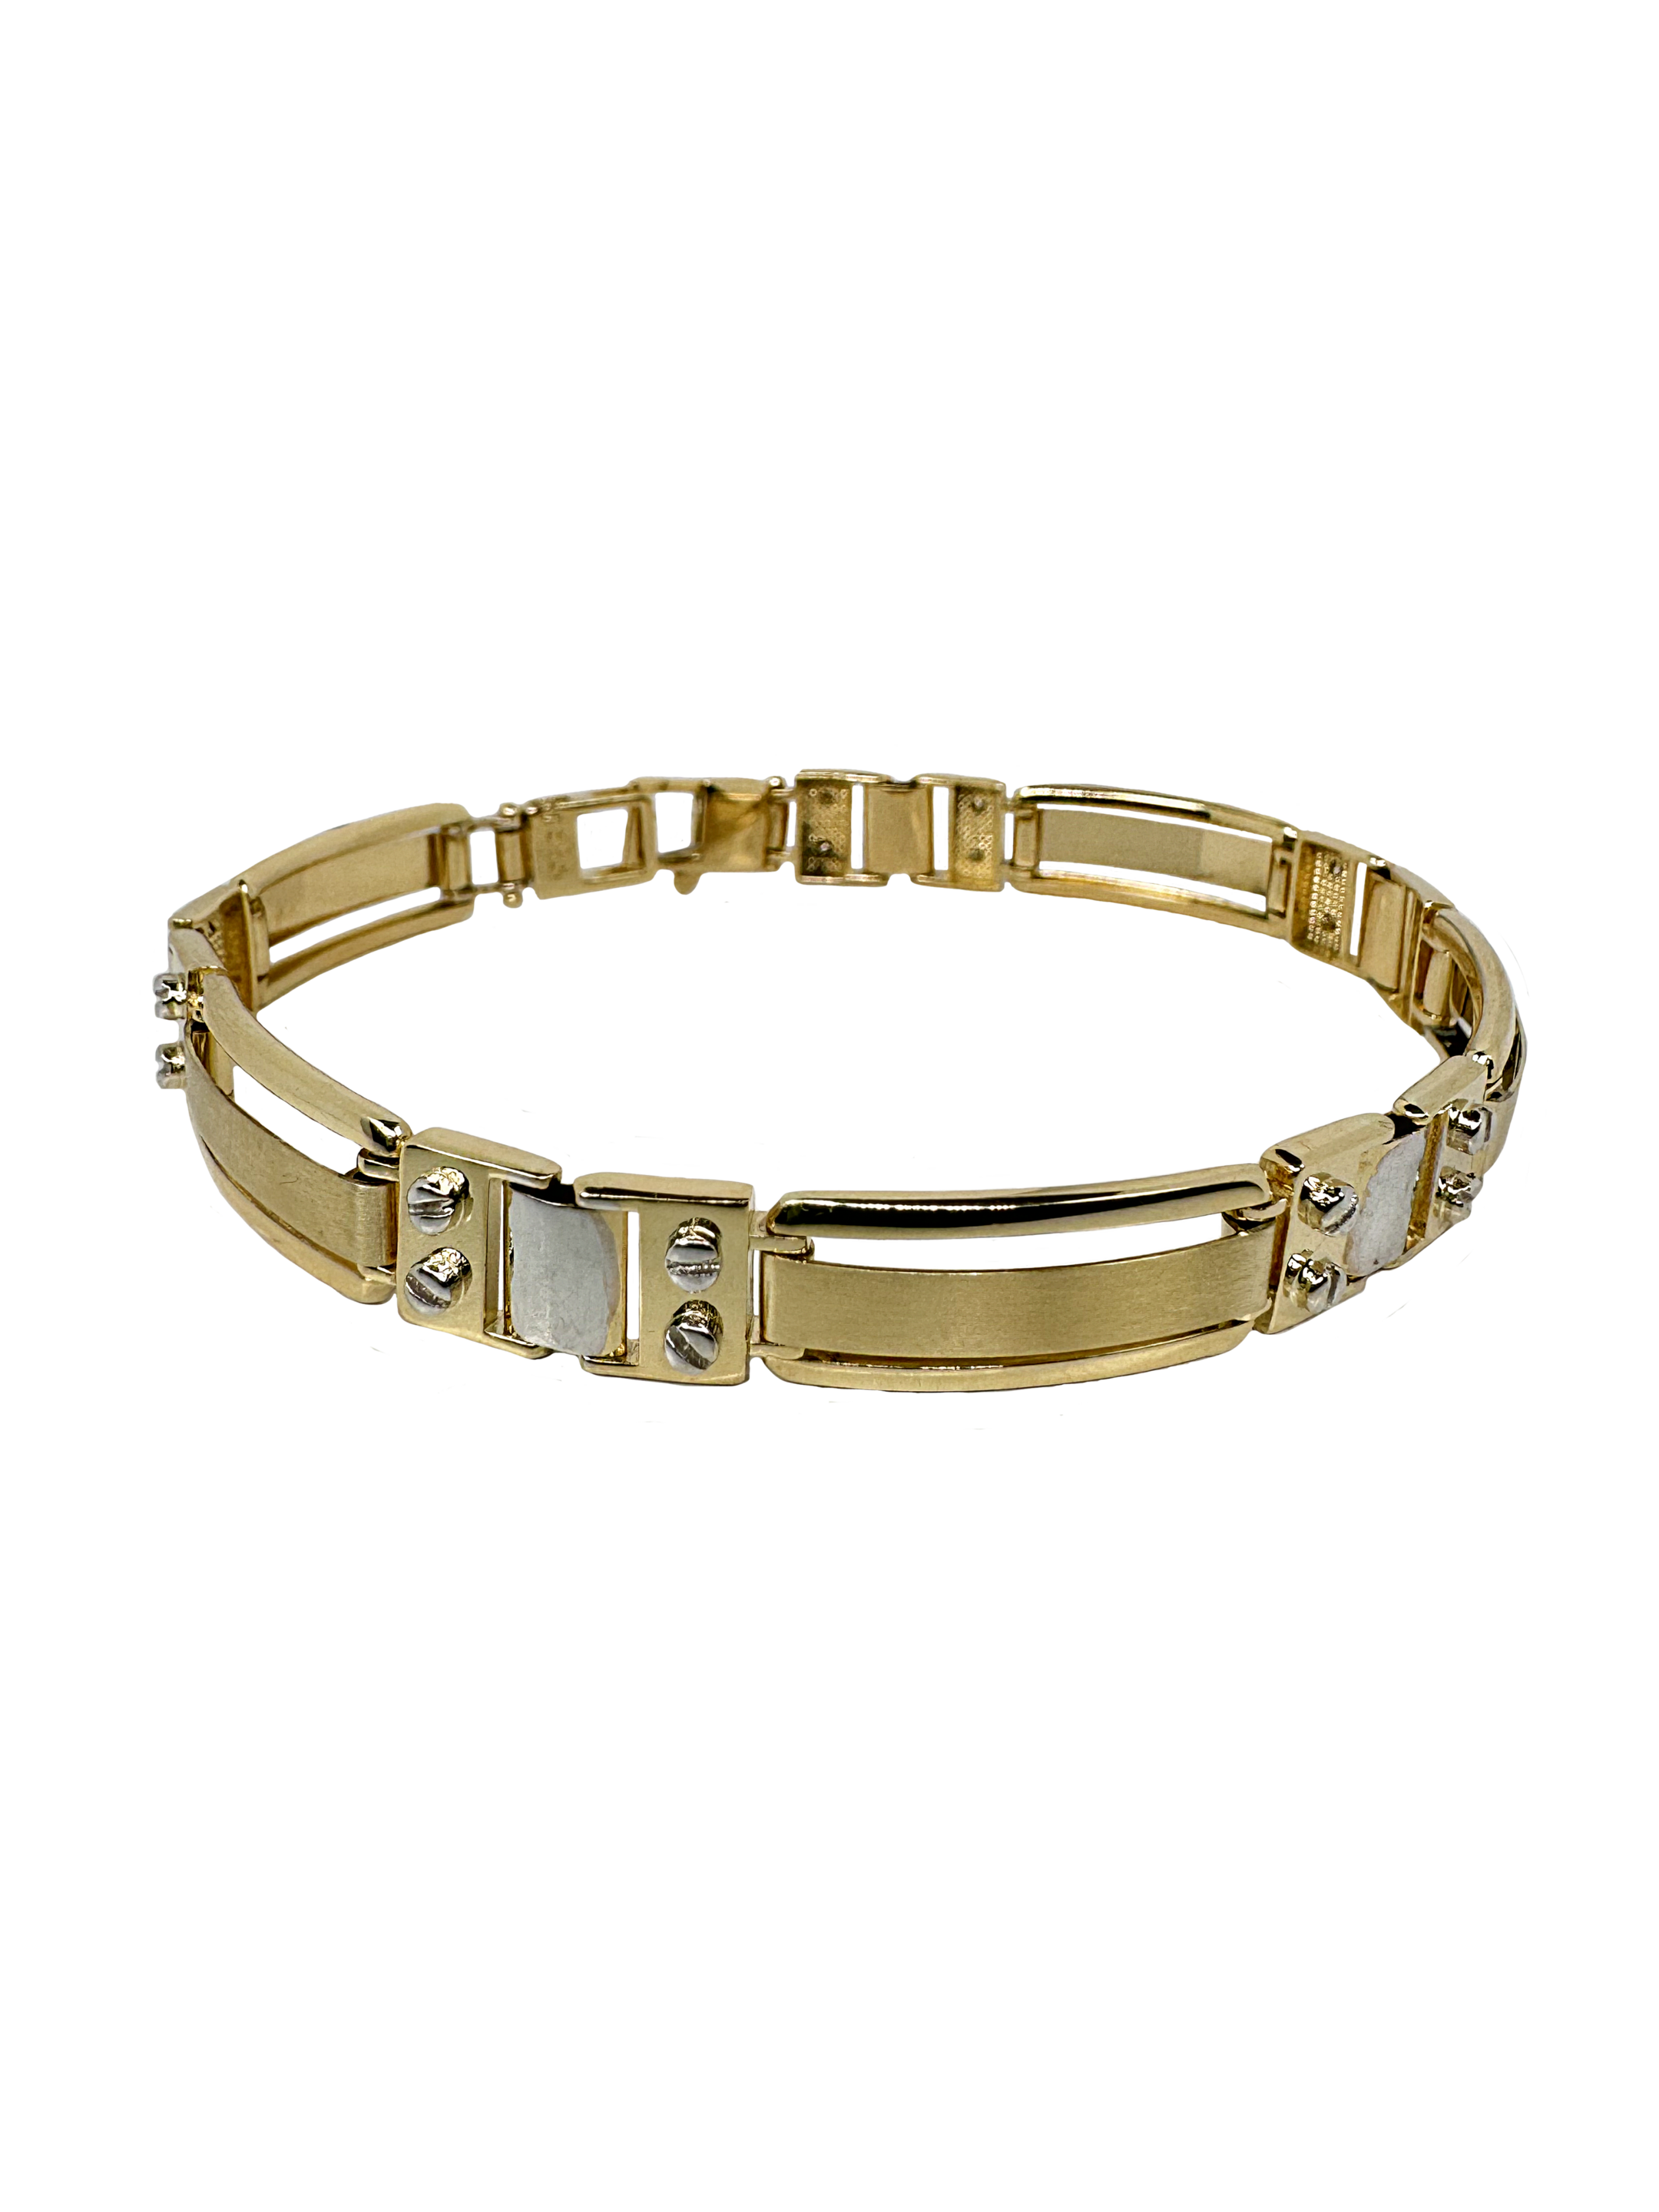 Gold men's solid bracelet made of combined gold